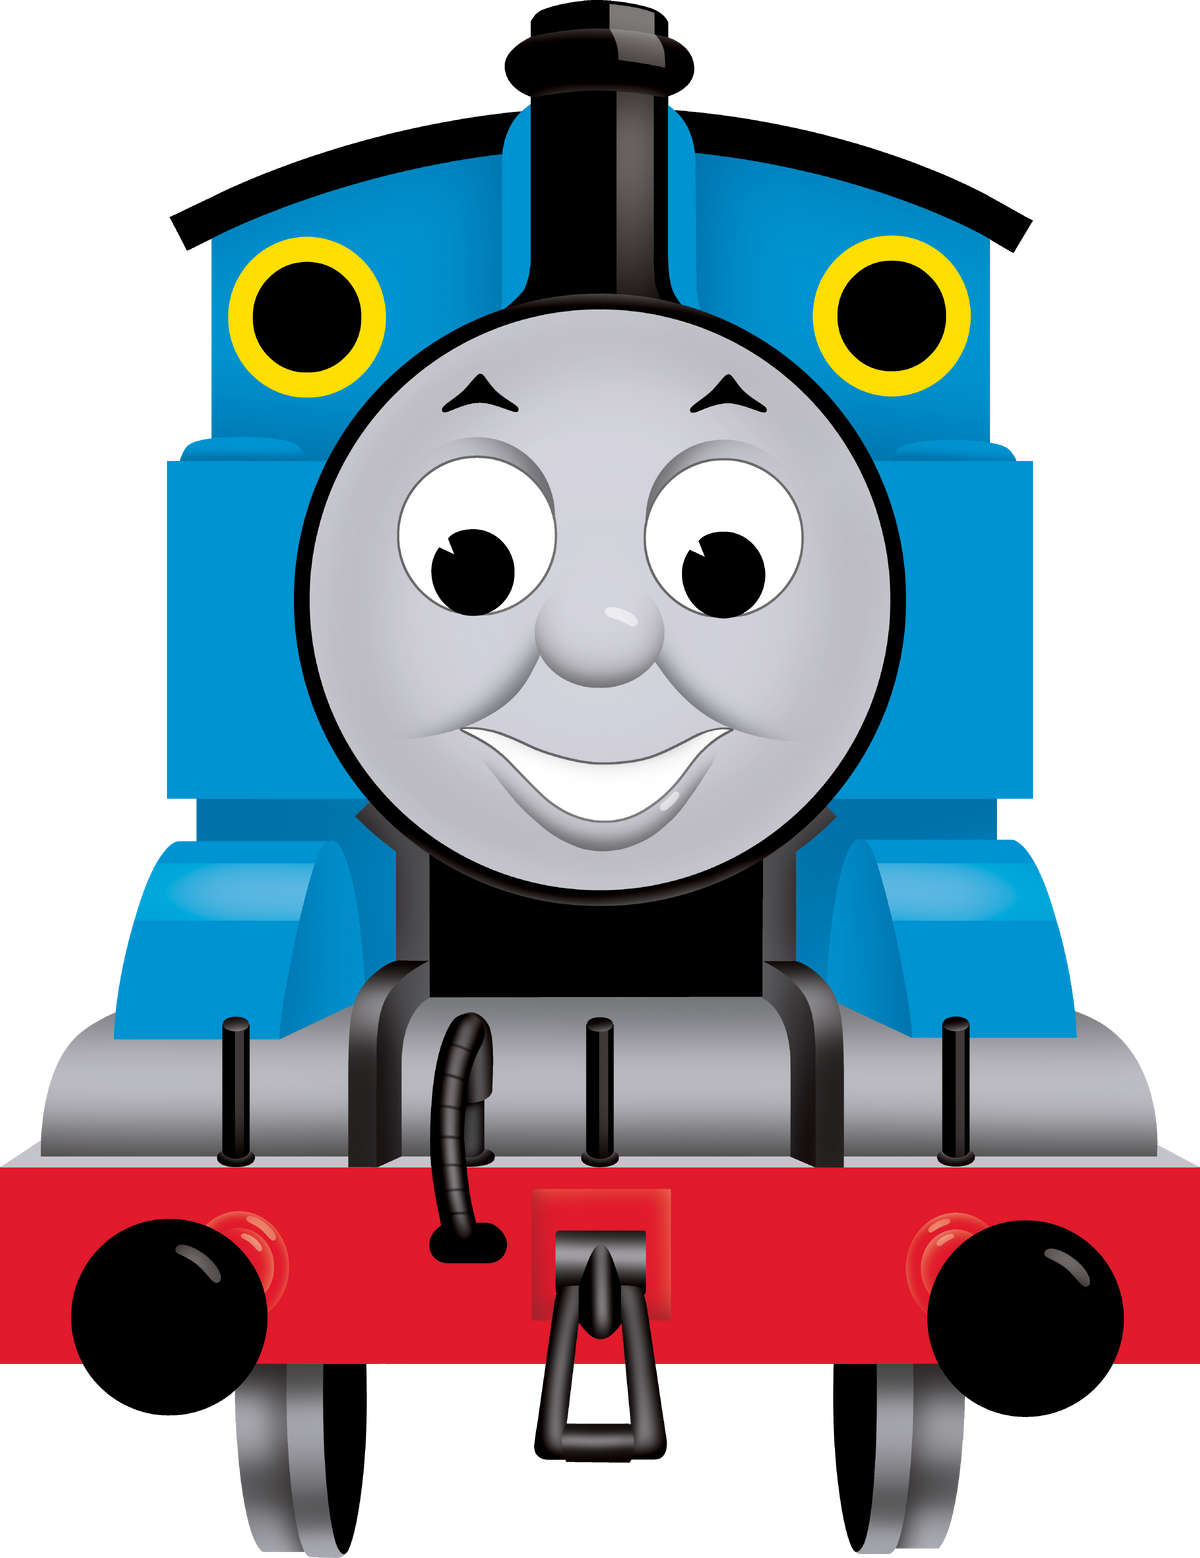 Thomas the Tank Engine | Thomas the Tank Engines' Adventures Series ...